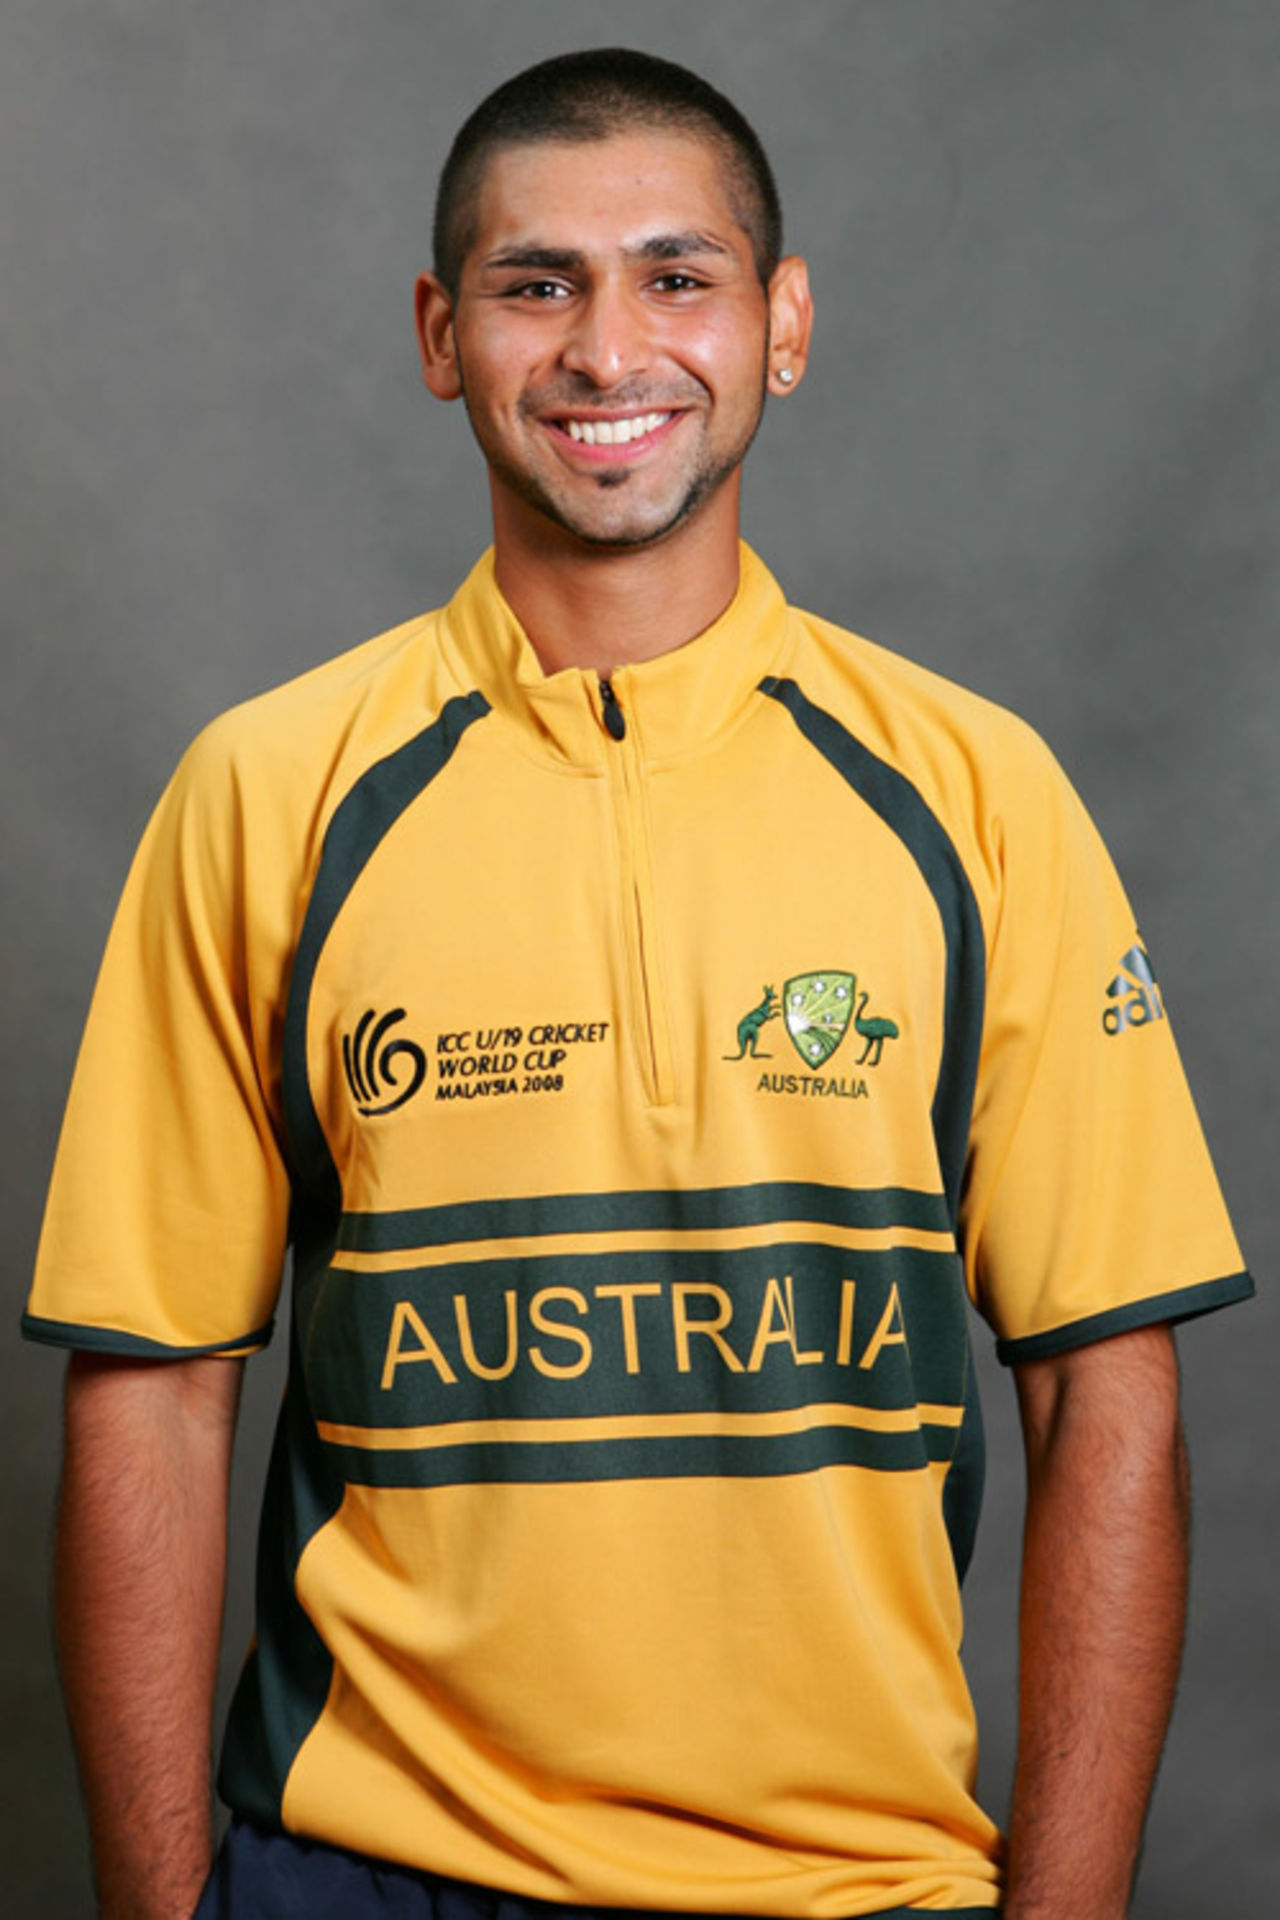 Kumar Sarna profile picture, February 13, 2008 
